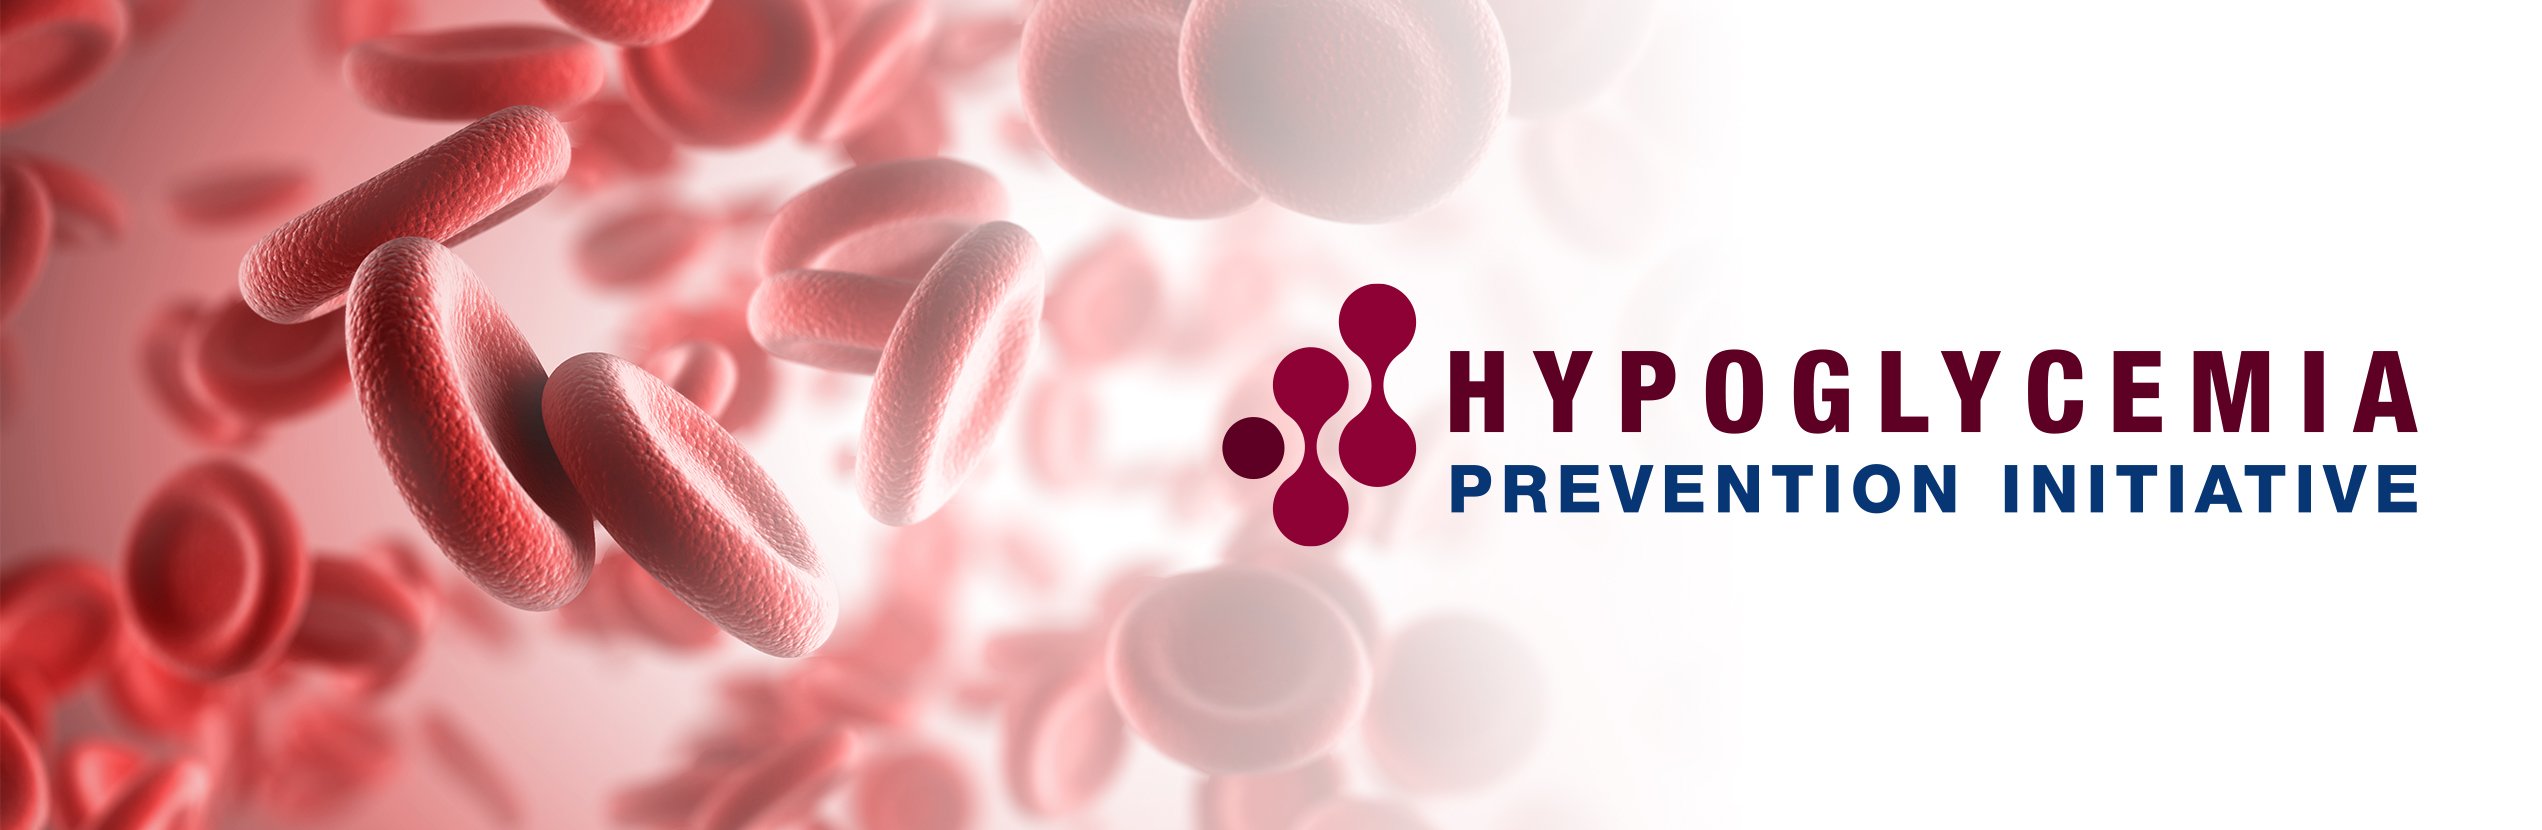 Hypoglycemia Prevention Initiative | Endocrine Society